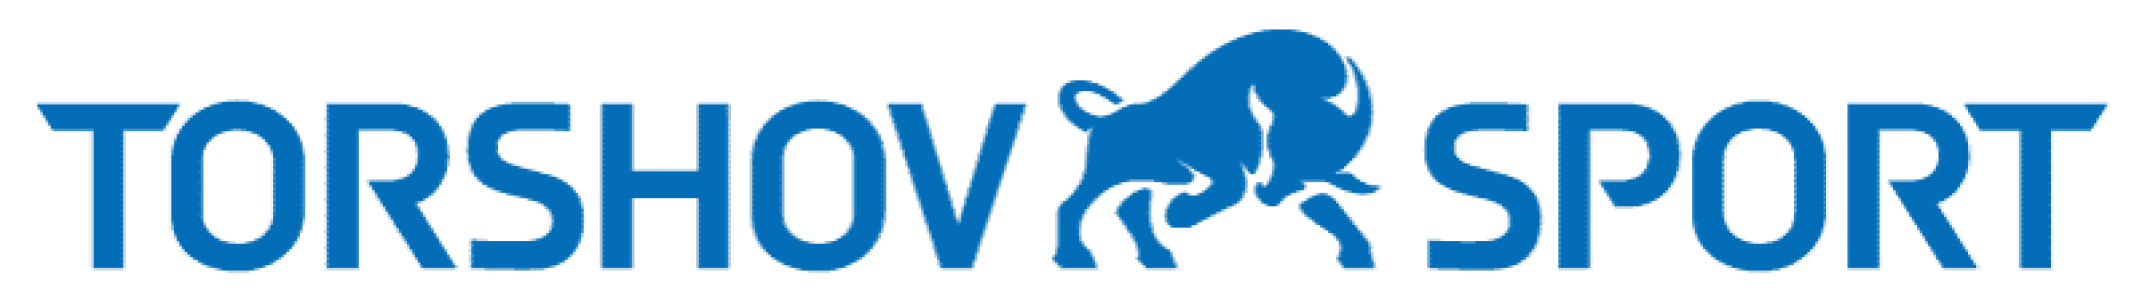 Torshovsport Logo